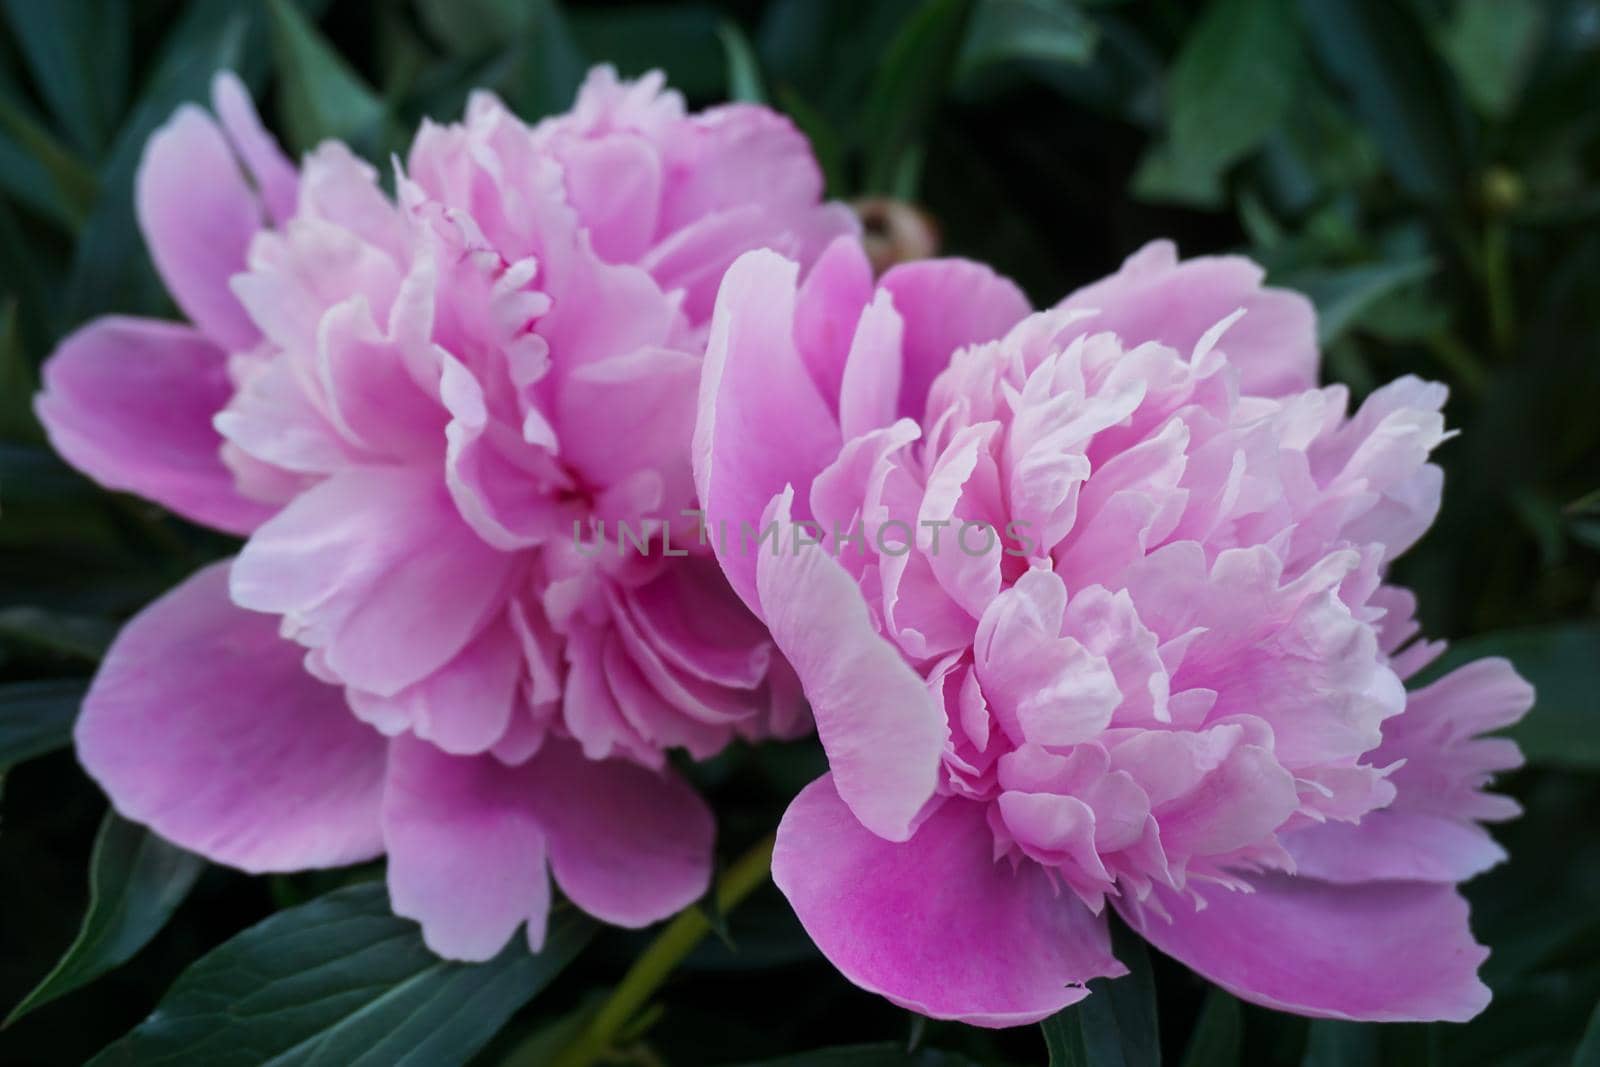 pink peonies taken in the garden close-up by Spirina